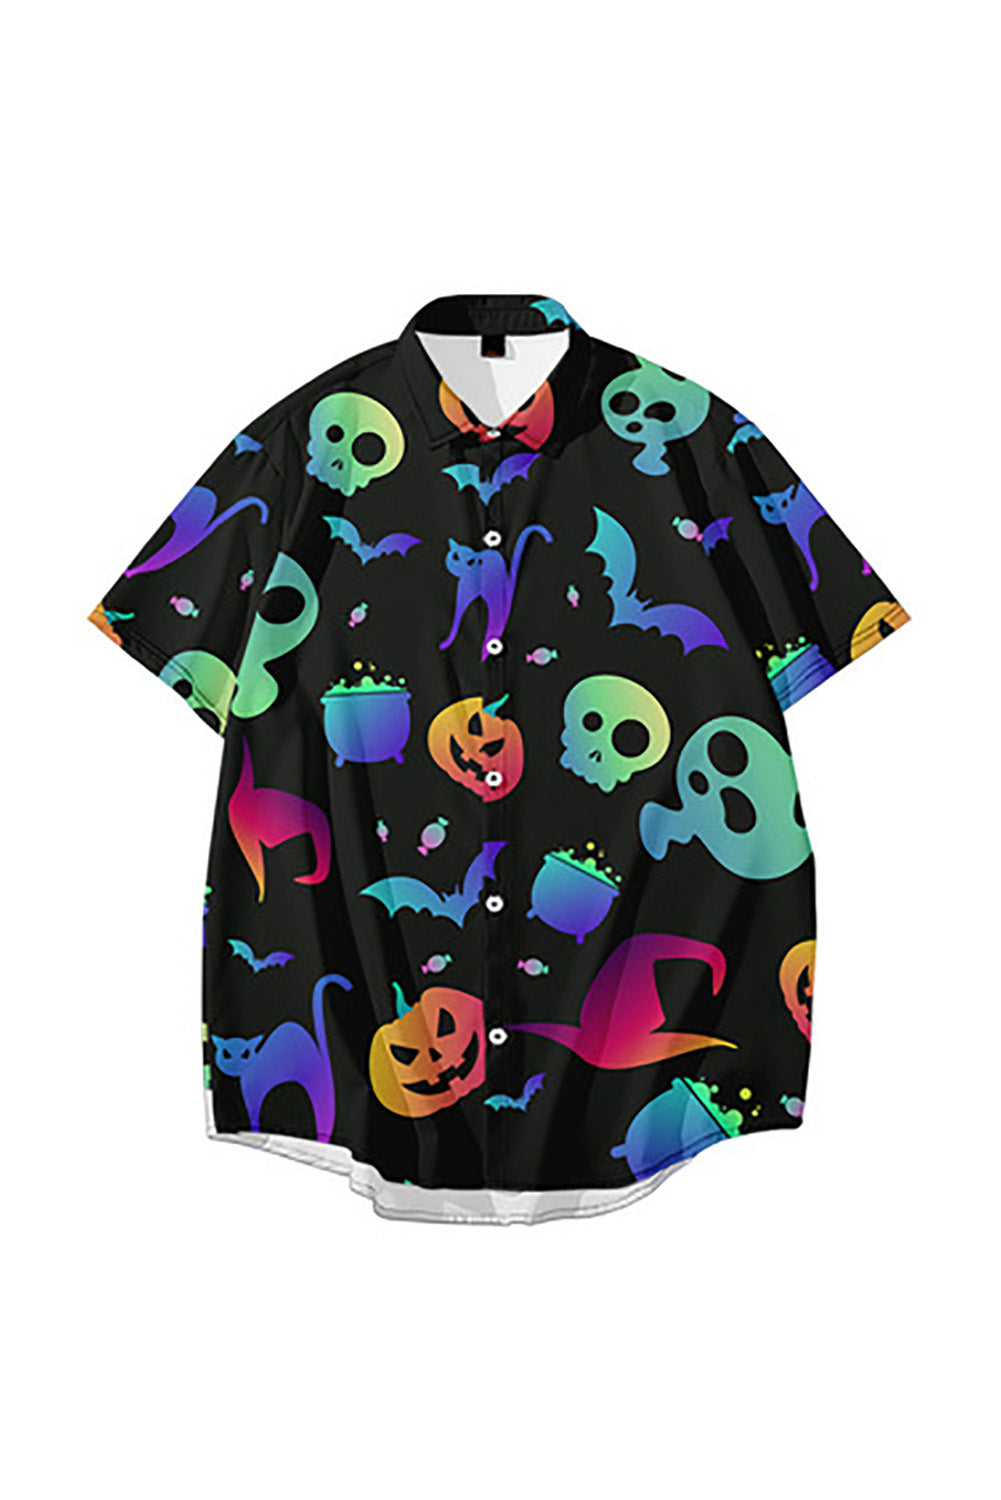 Halloween Graphic Print Button Up Men's Shirt Men's Tops JT's Designer Fashion